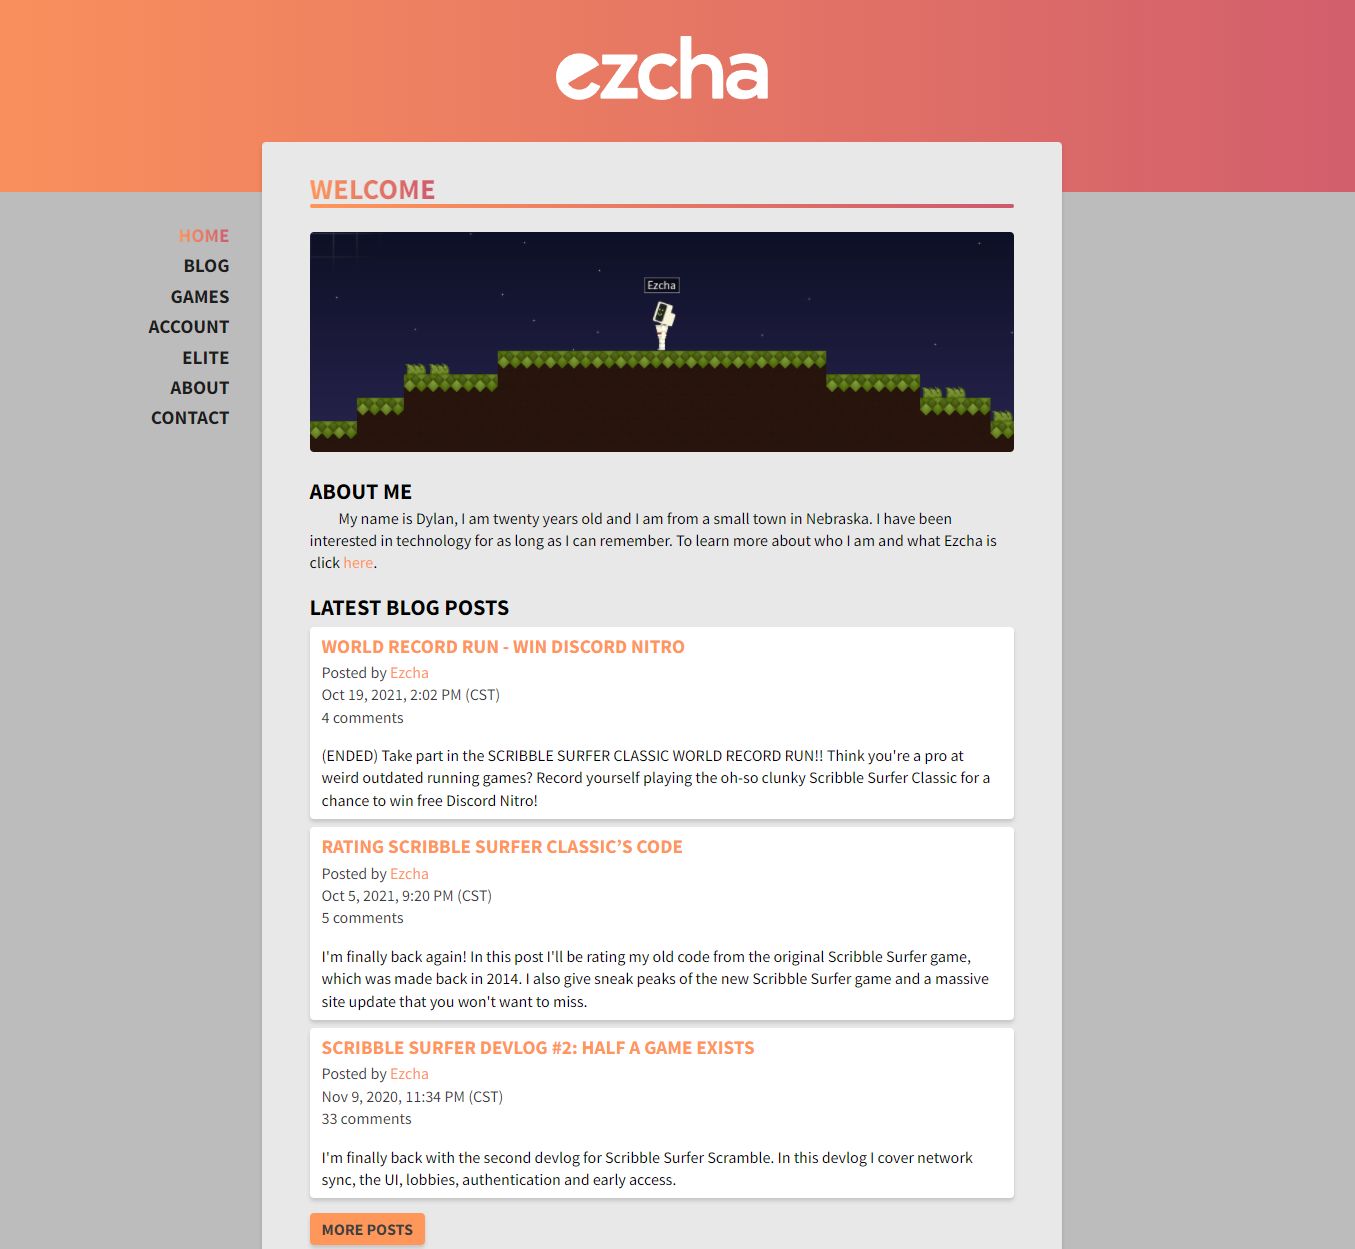 Screenshot of ezcha.net Light Theme